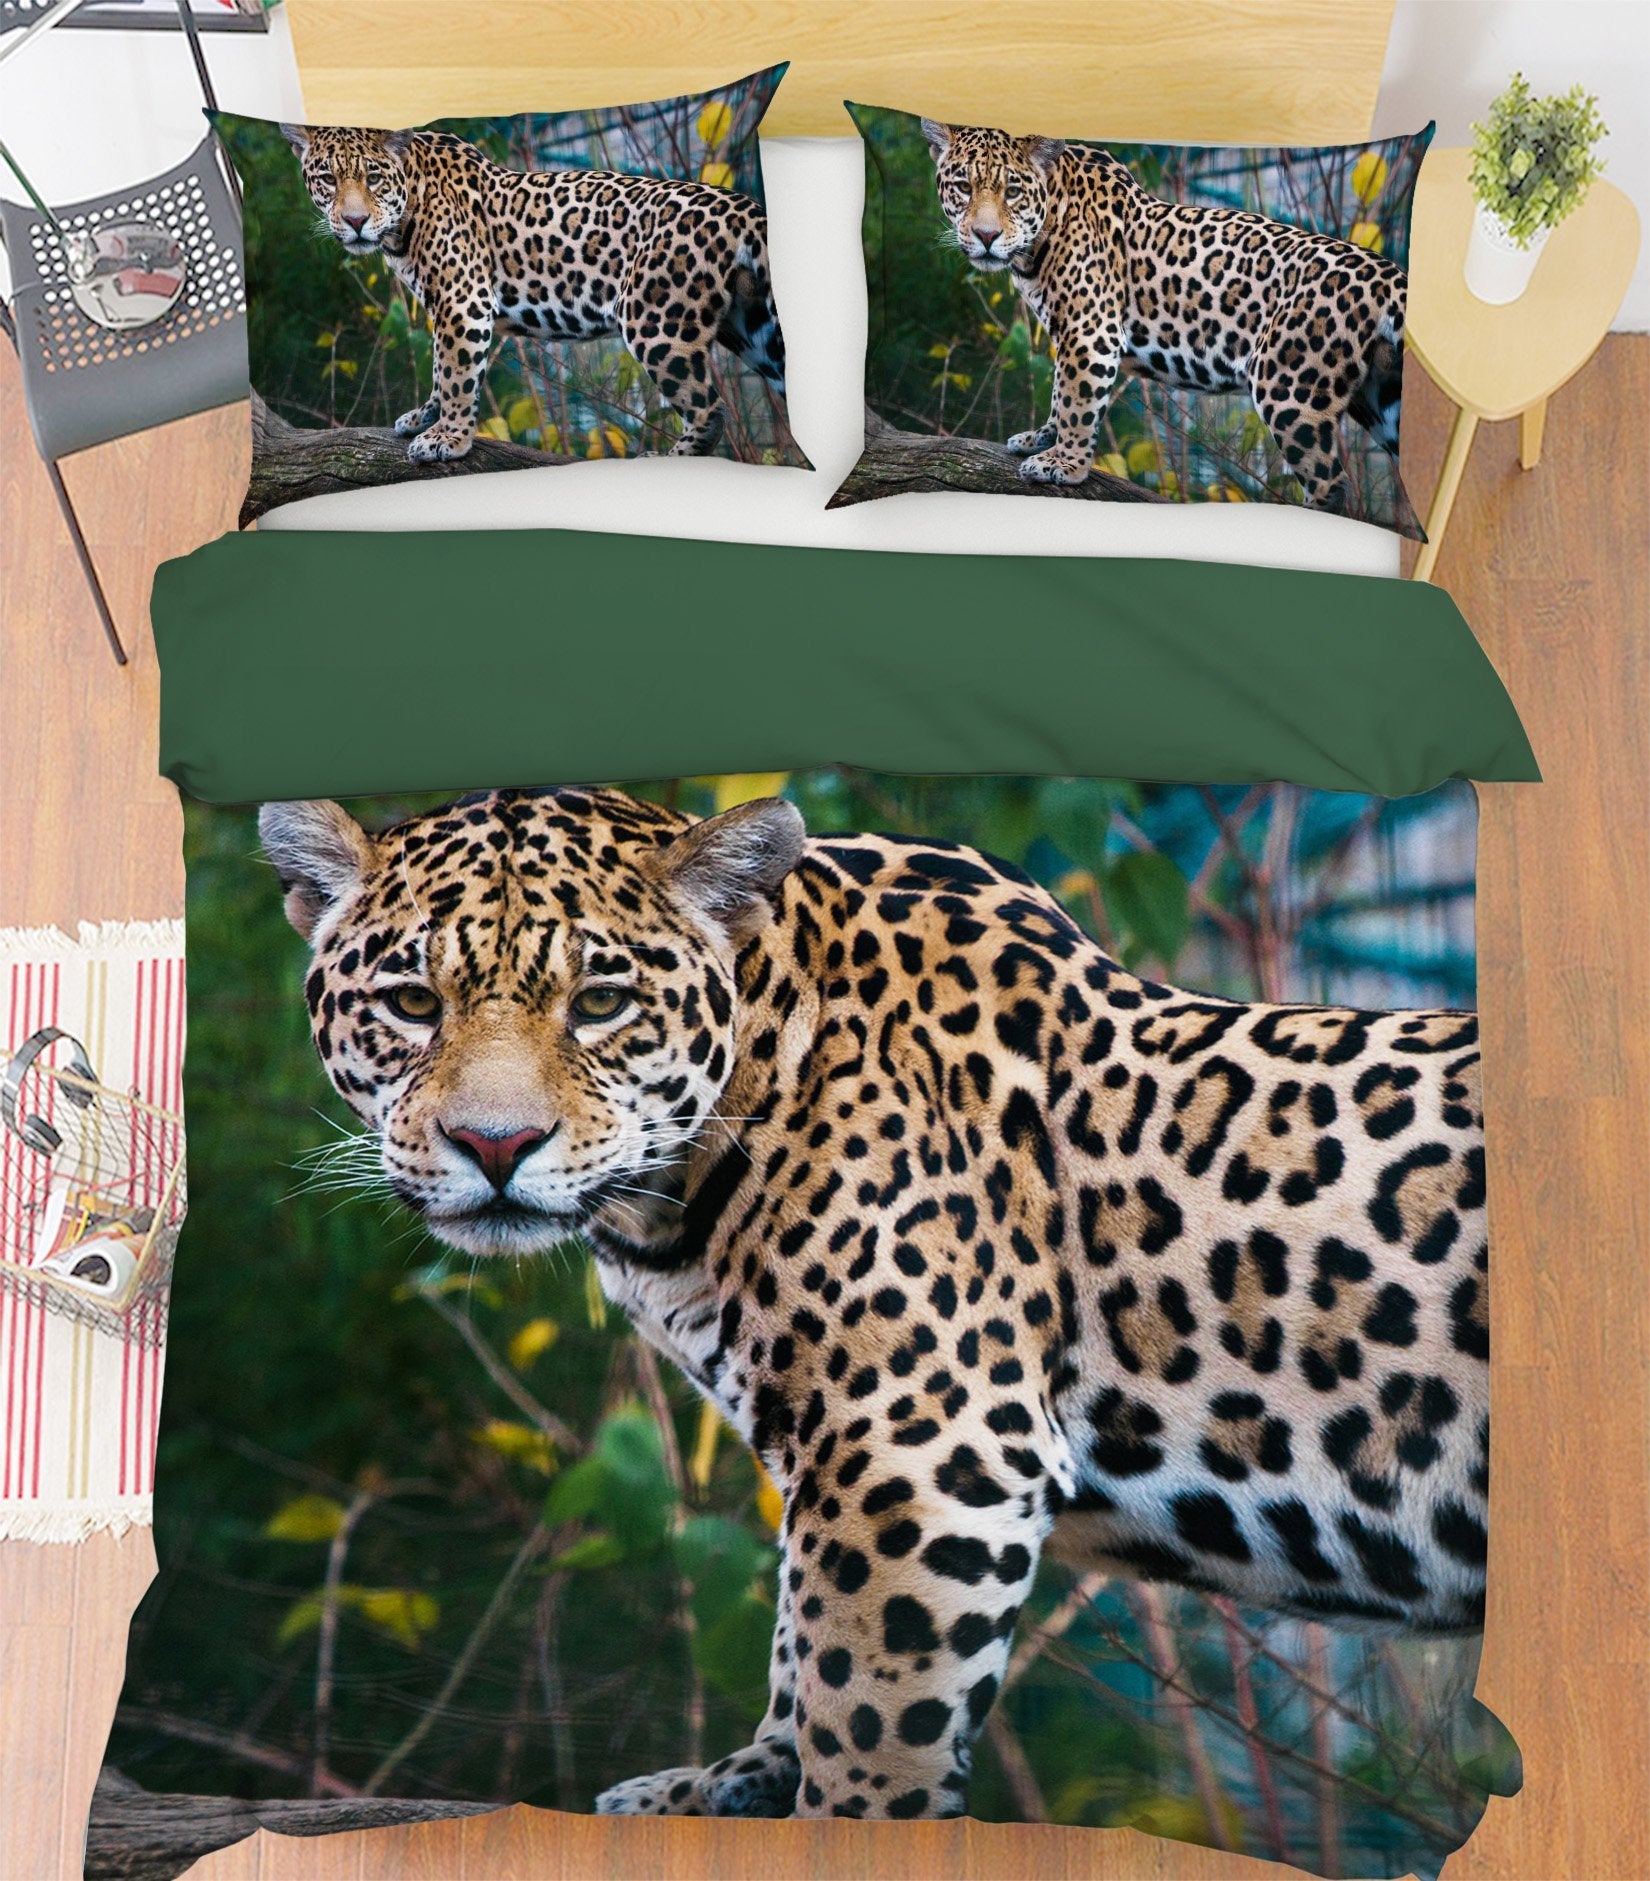 3D Prairie Tiger 1921 Bed Pillowcases Quilt Quiet Covers AJ Creativity Home 